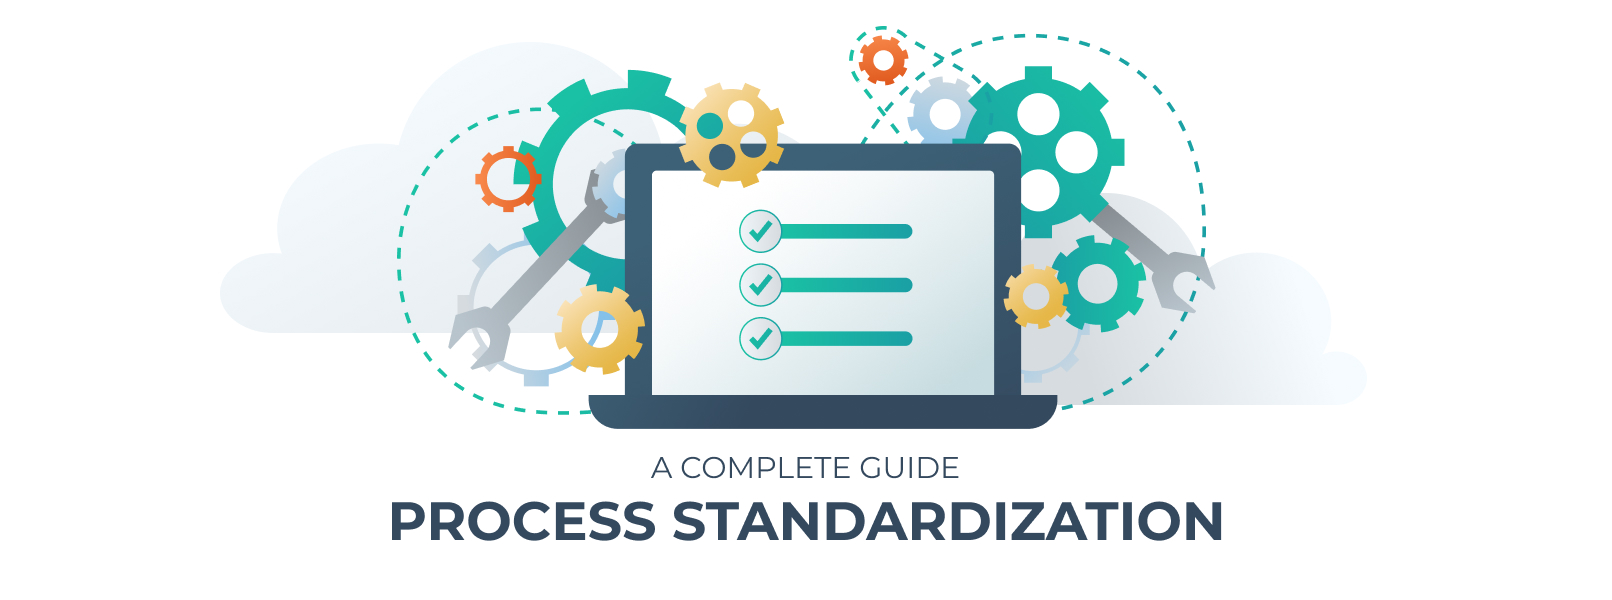 Process standardization cover